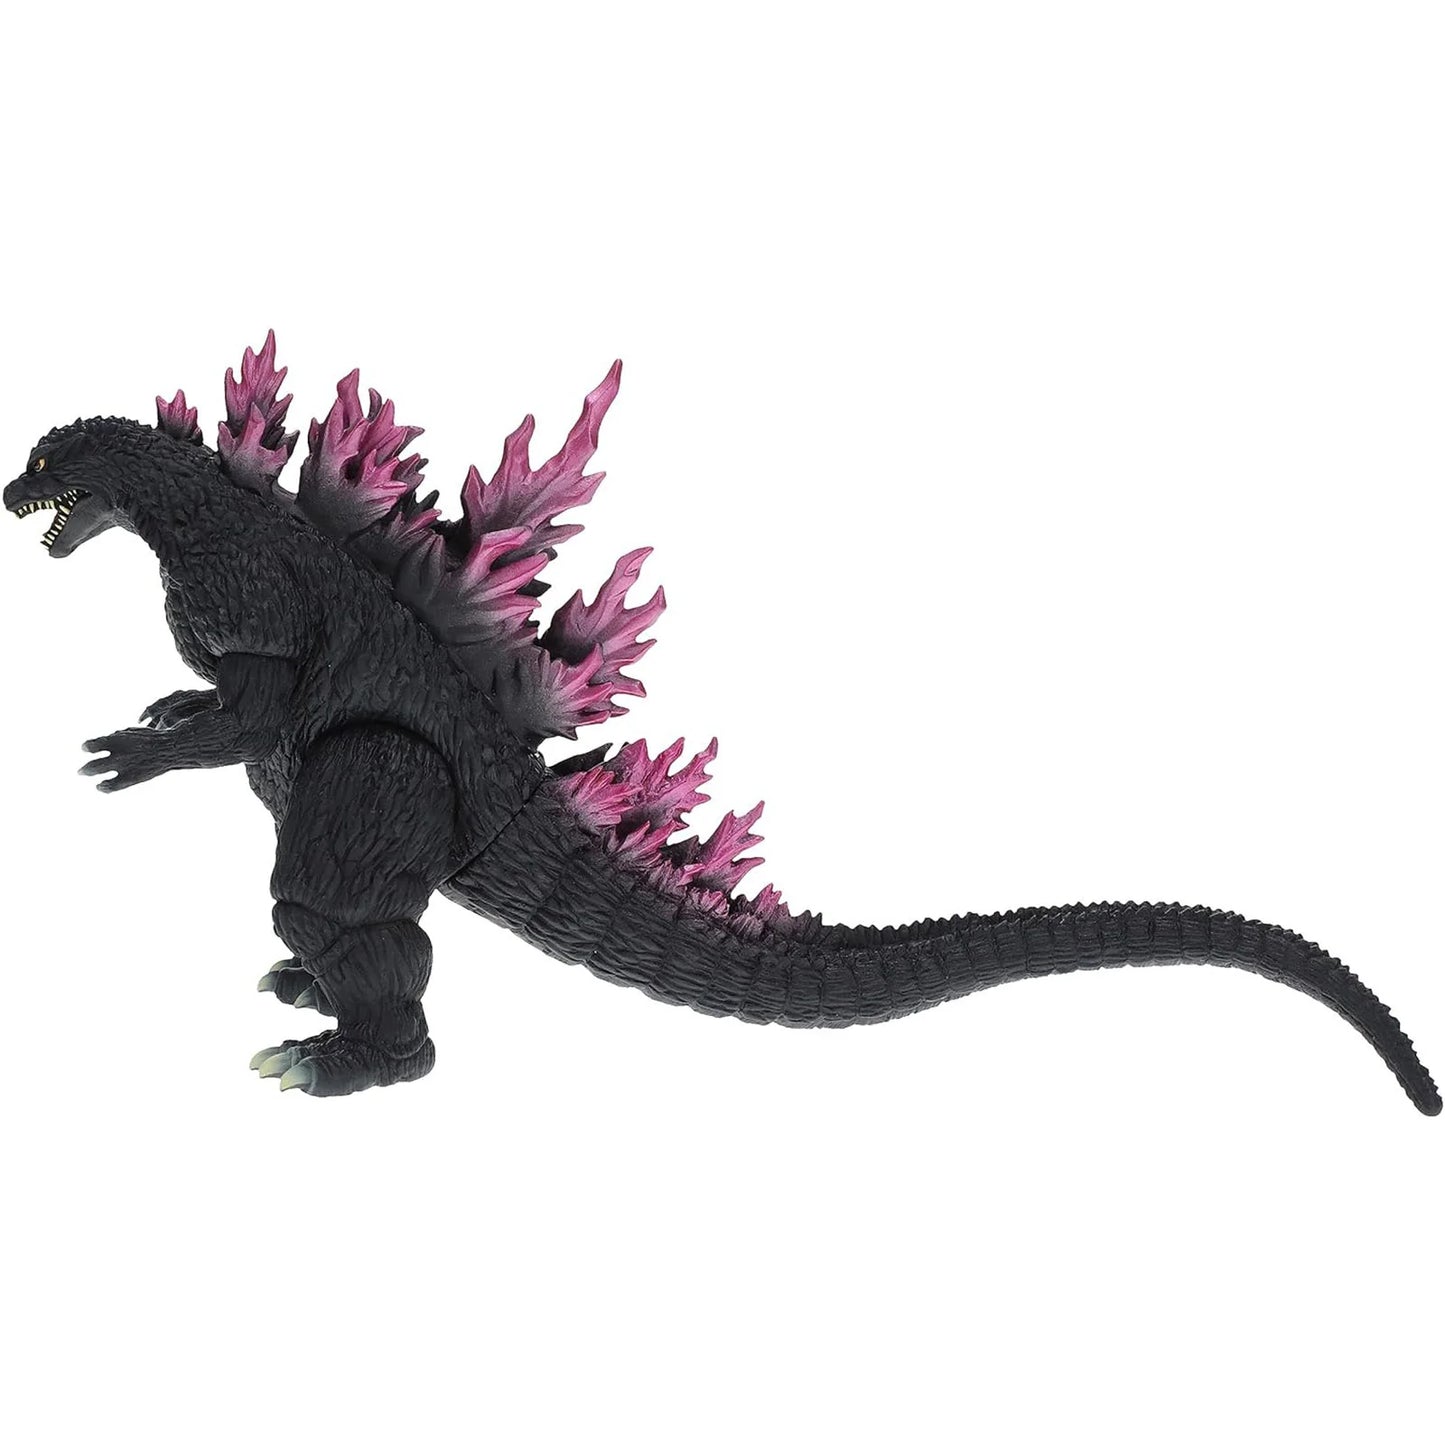 Millennium Godzilla Movie Monster Series 7" Figure